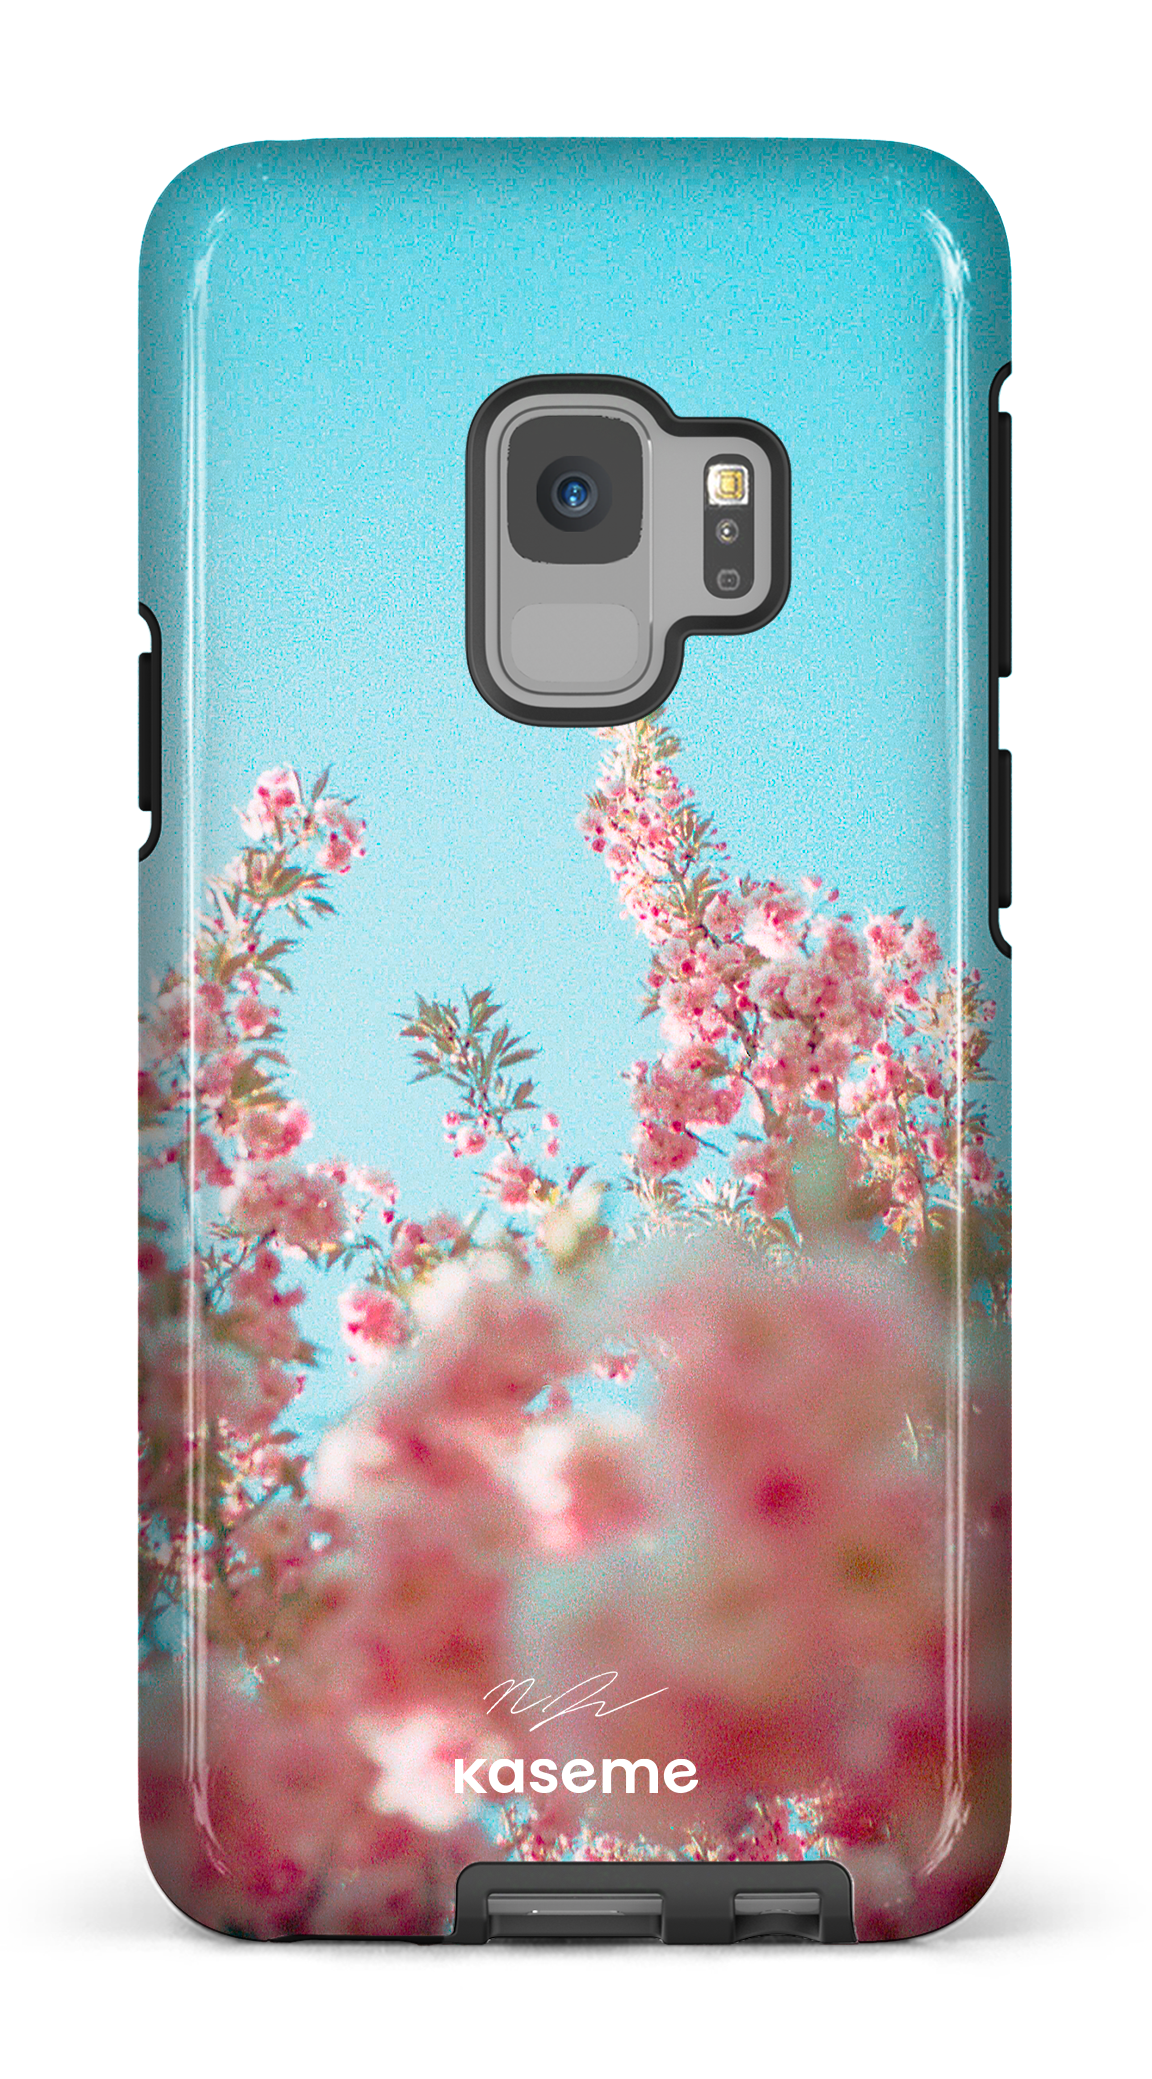 Bloom by Nevin Johnson - Galaxy S9